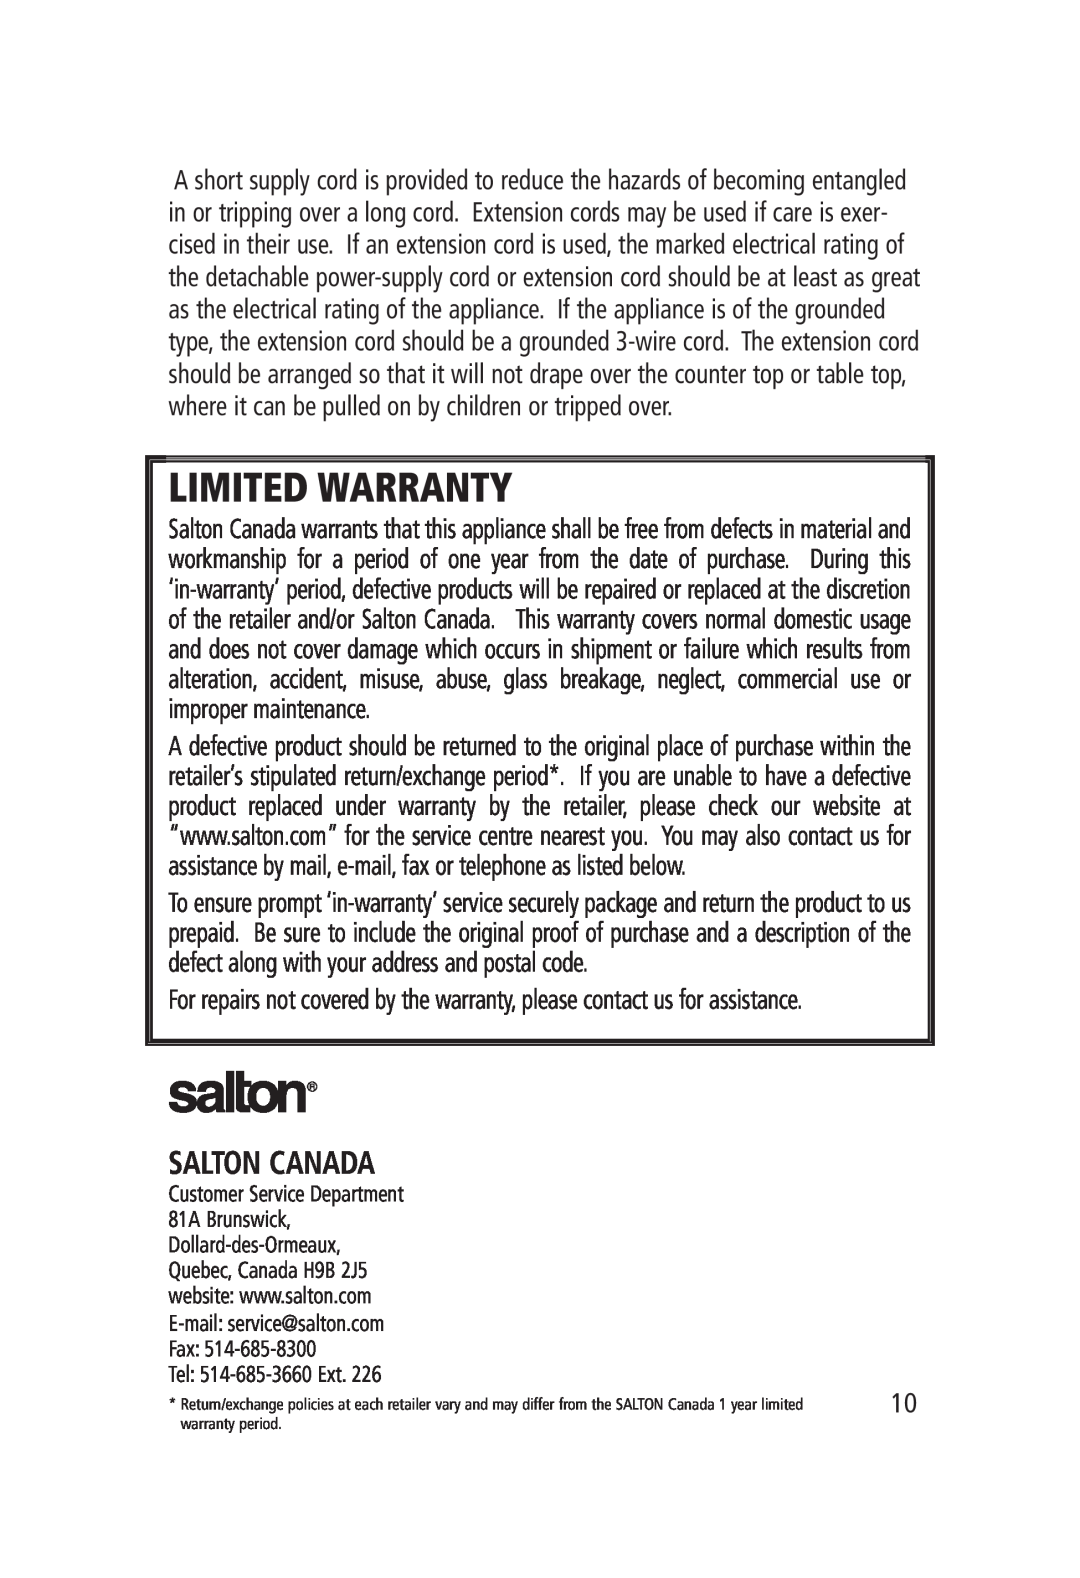 Salton JE-1187 manual Salton Canada, Limited Warranty, Tel 514-685-3660 Ext 